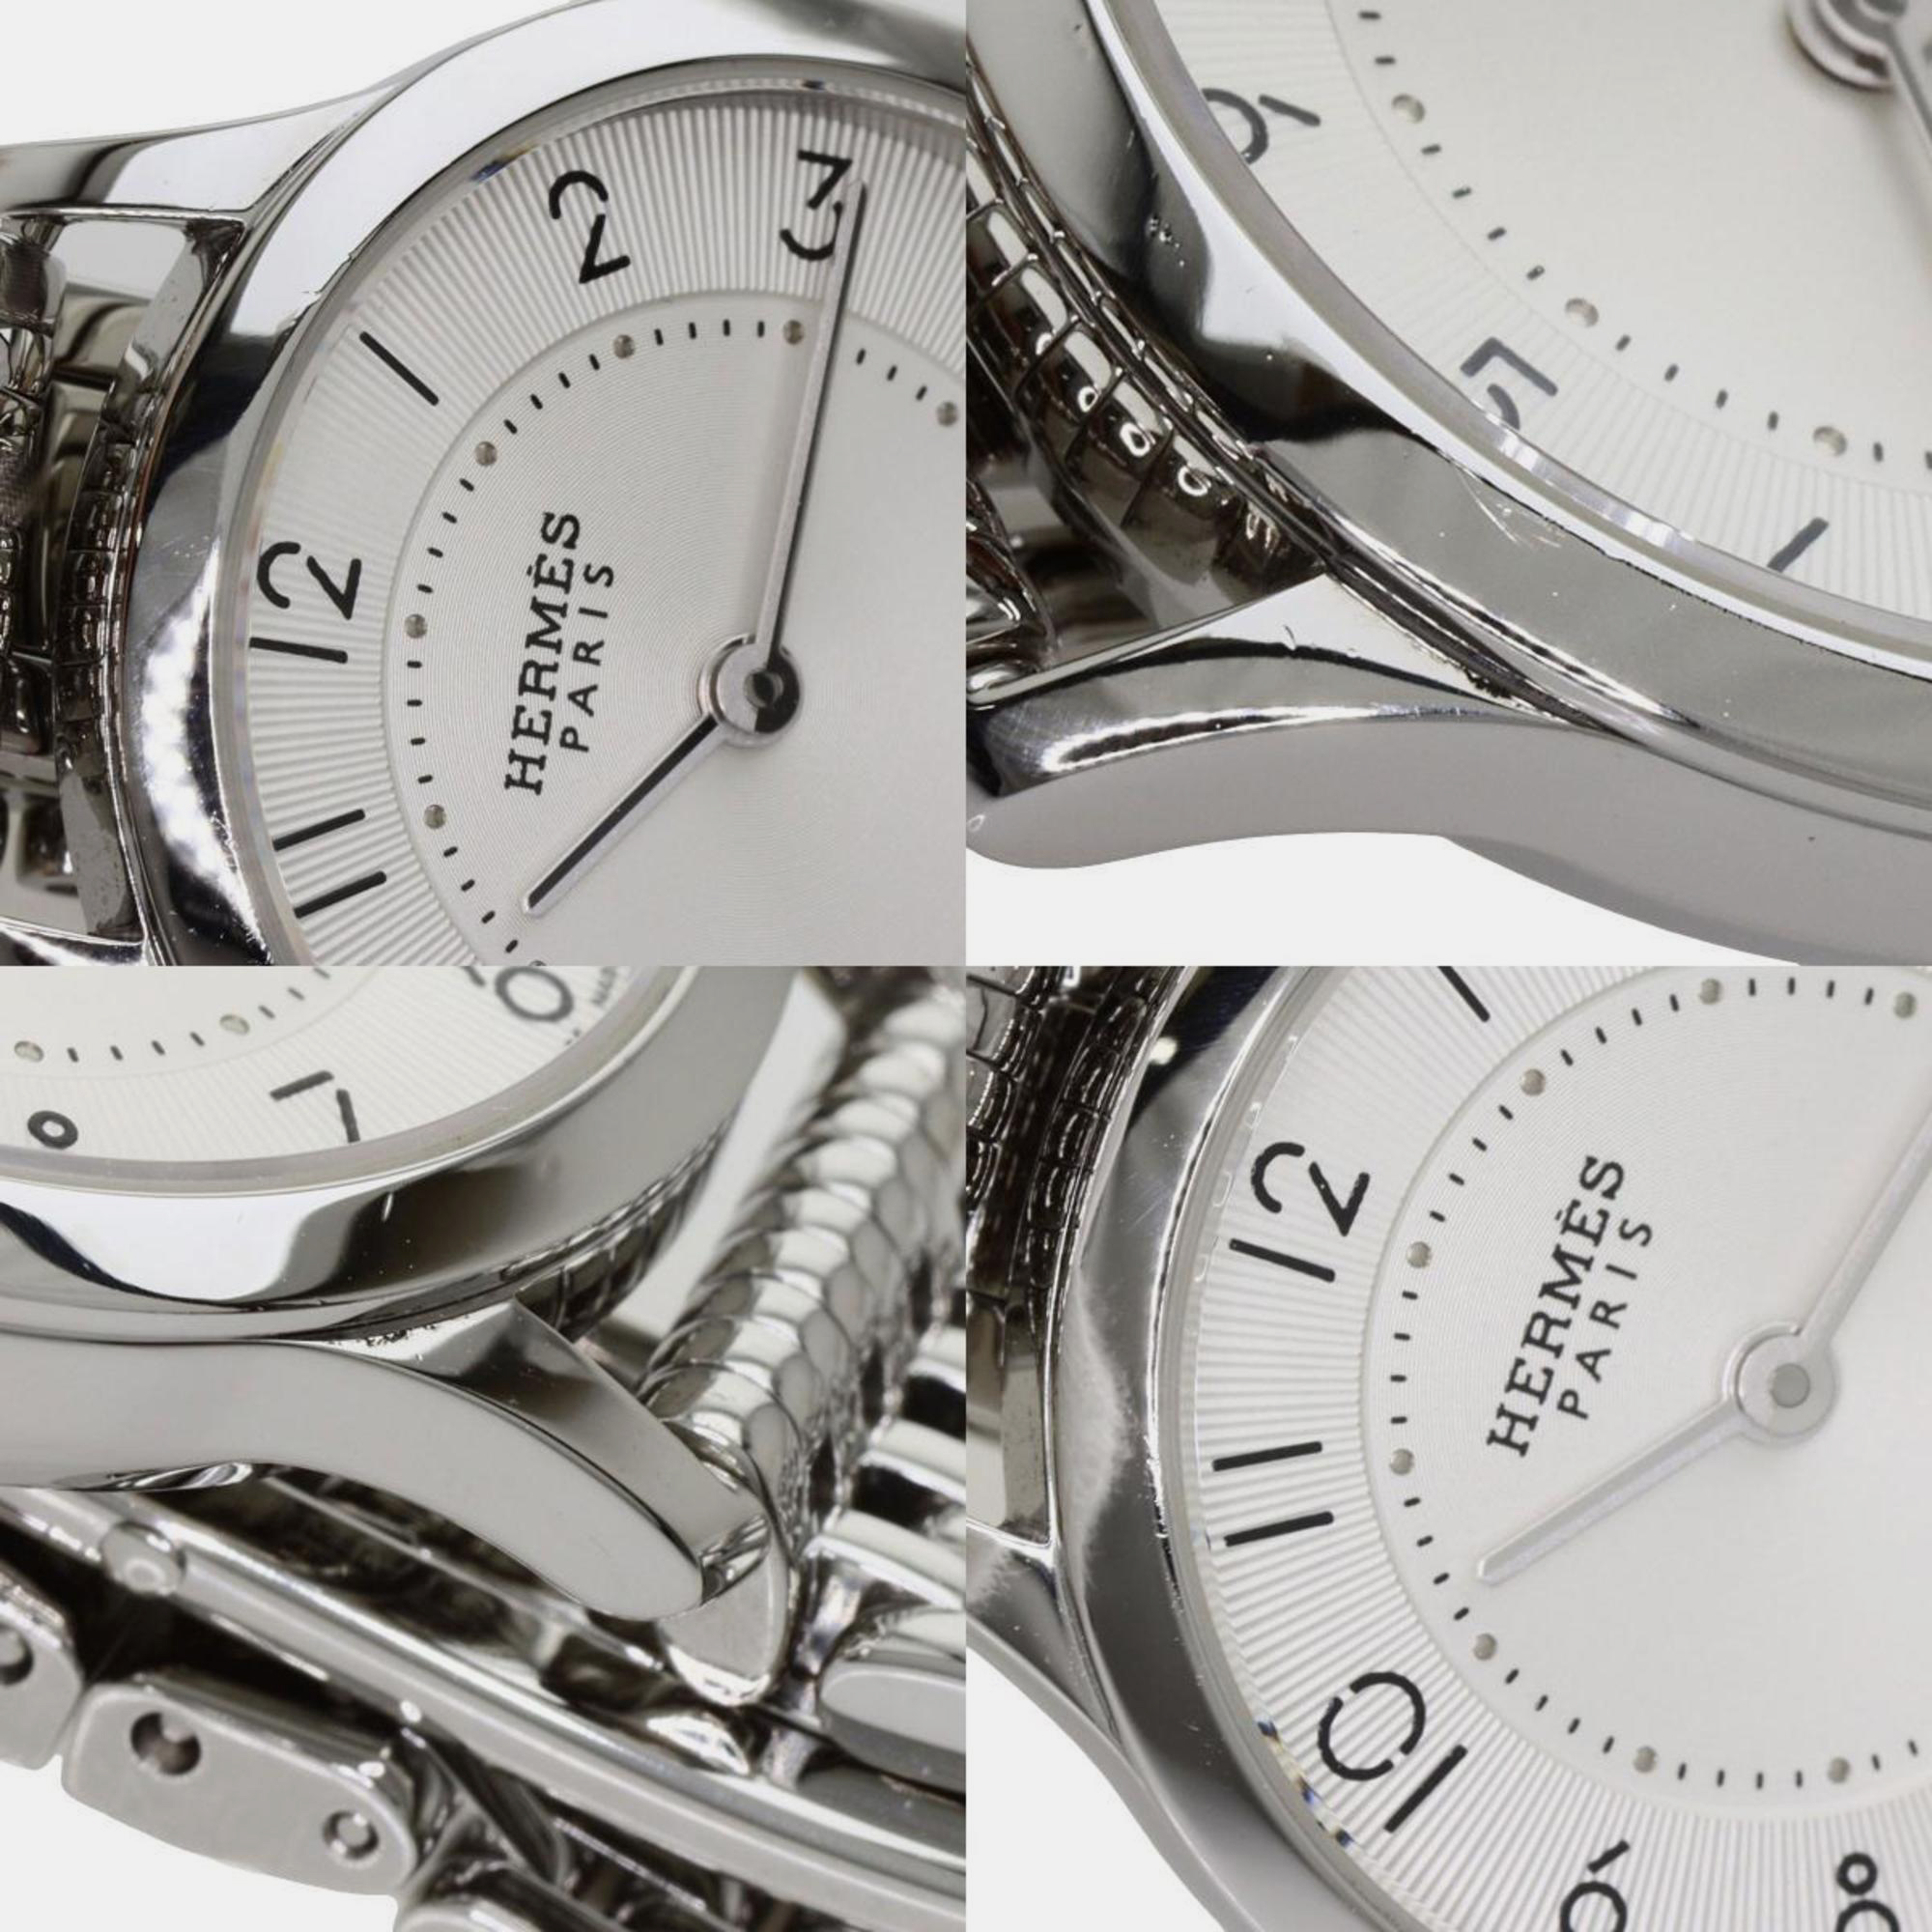 Hermes White Stainless Steel Slim D'Hermes CA2.110 Quartz Women's Wristwatch 25 Mm